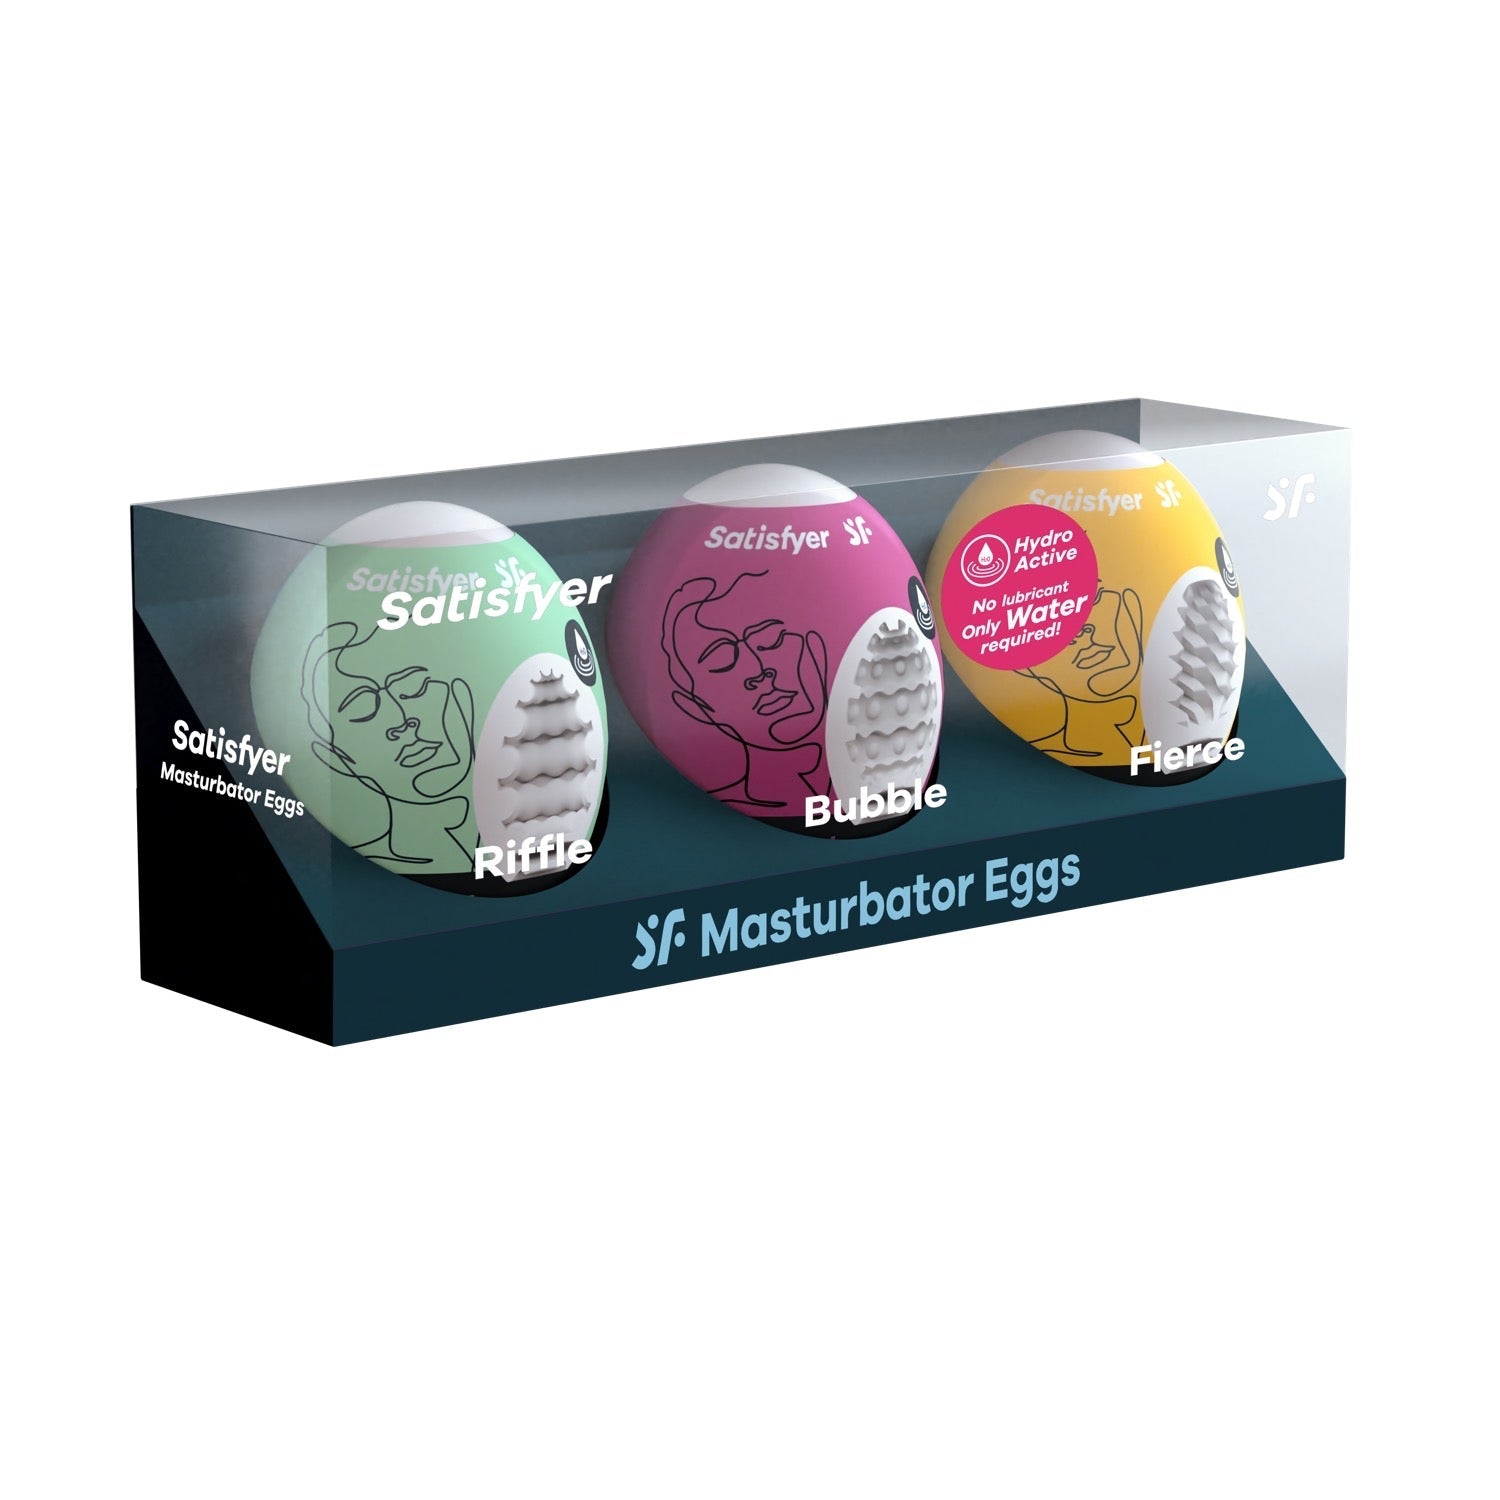 Satisfyer Masturbator Eggs - Mixed 3 Pack #1 - White by Satisfyer